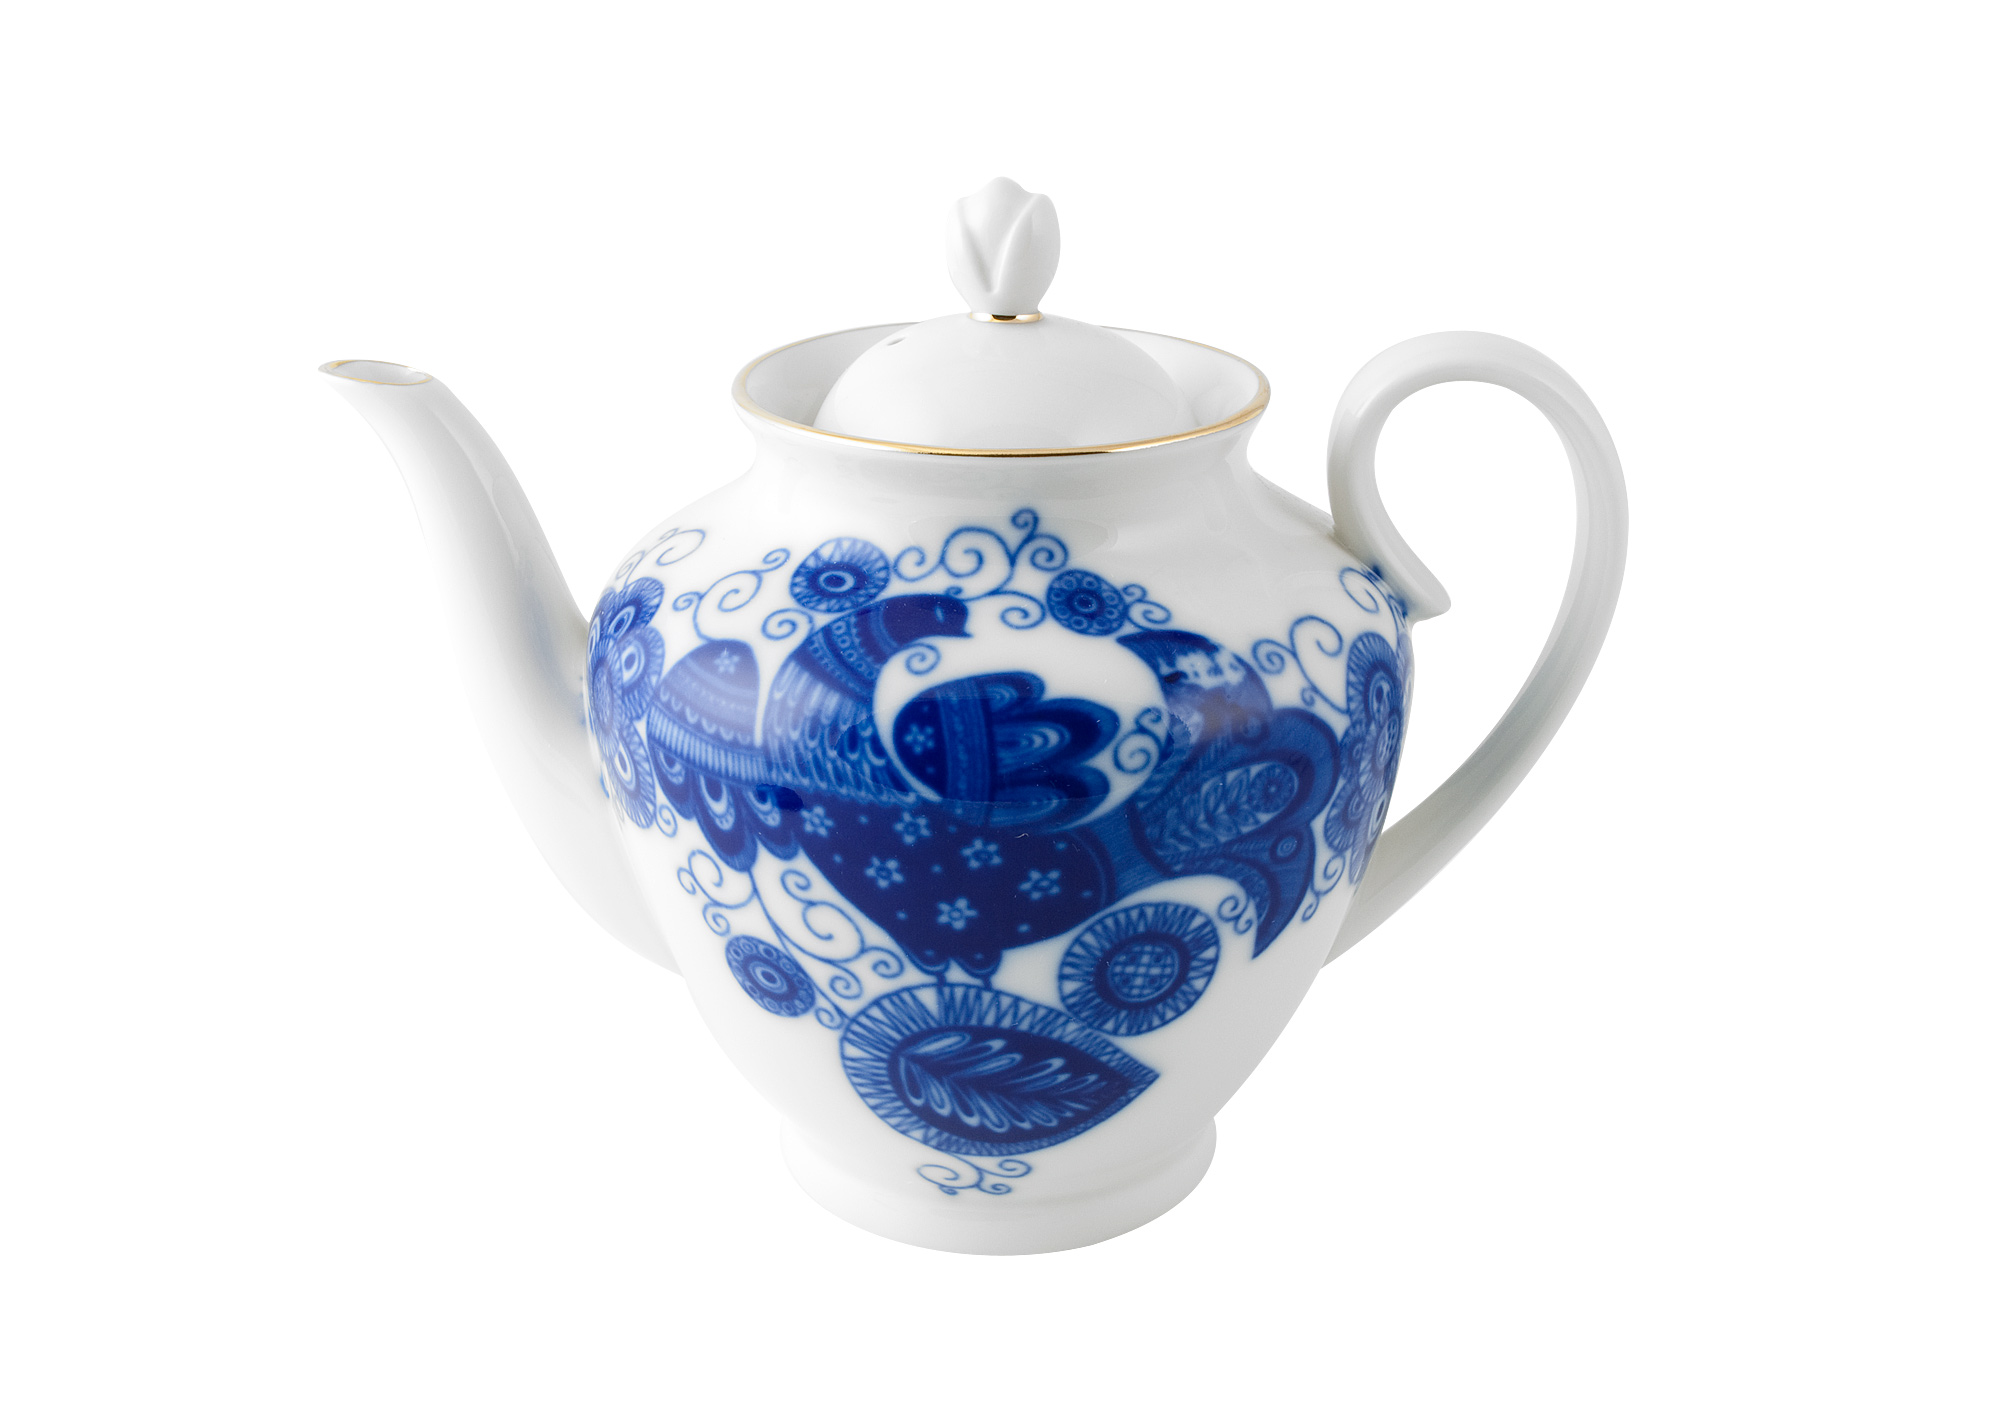 Buy Cobalt Lace Teapot at GoldenCockerel.com